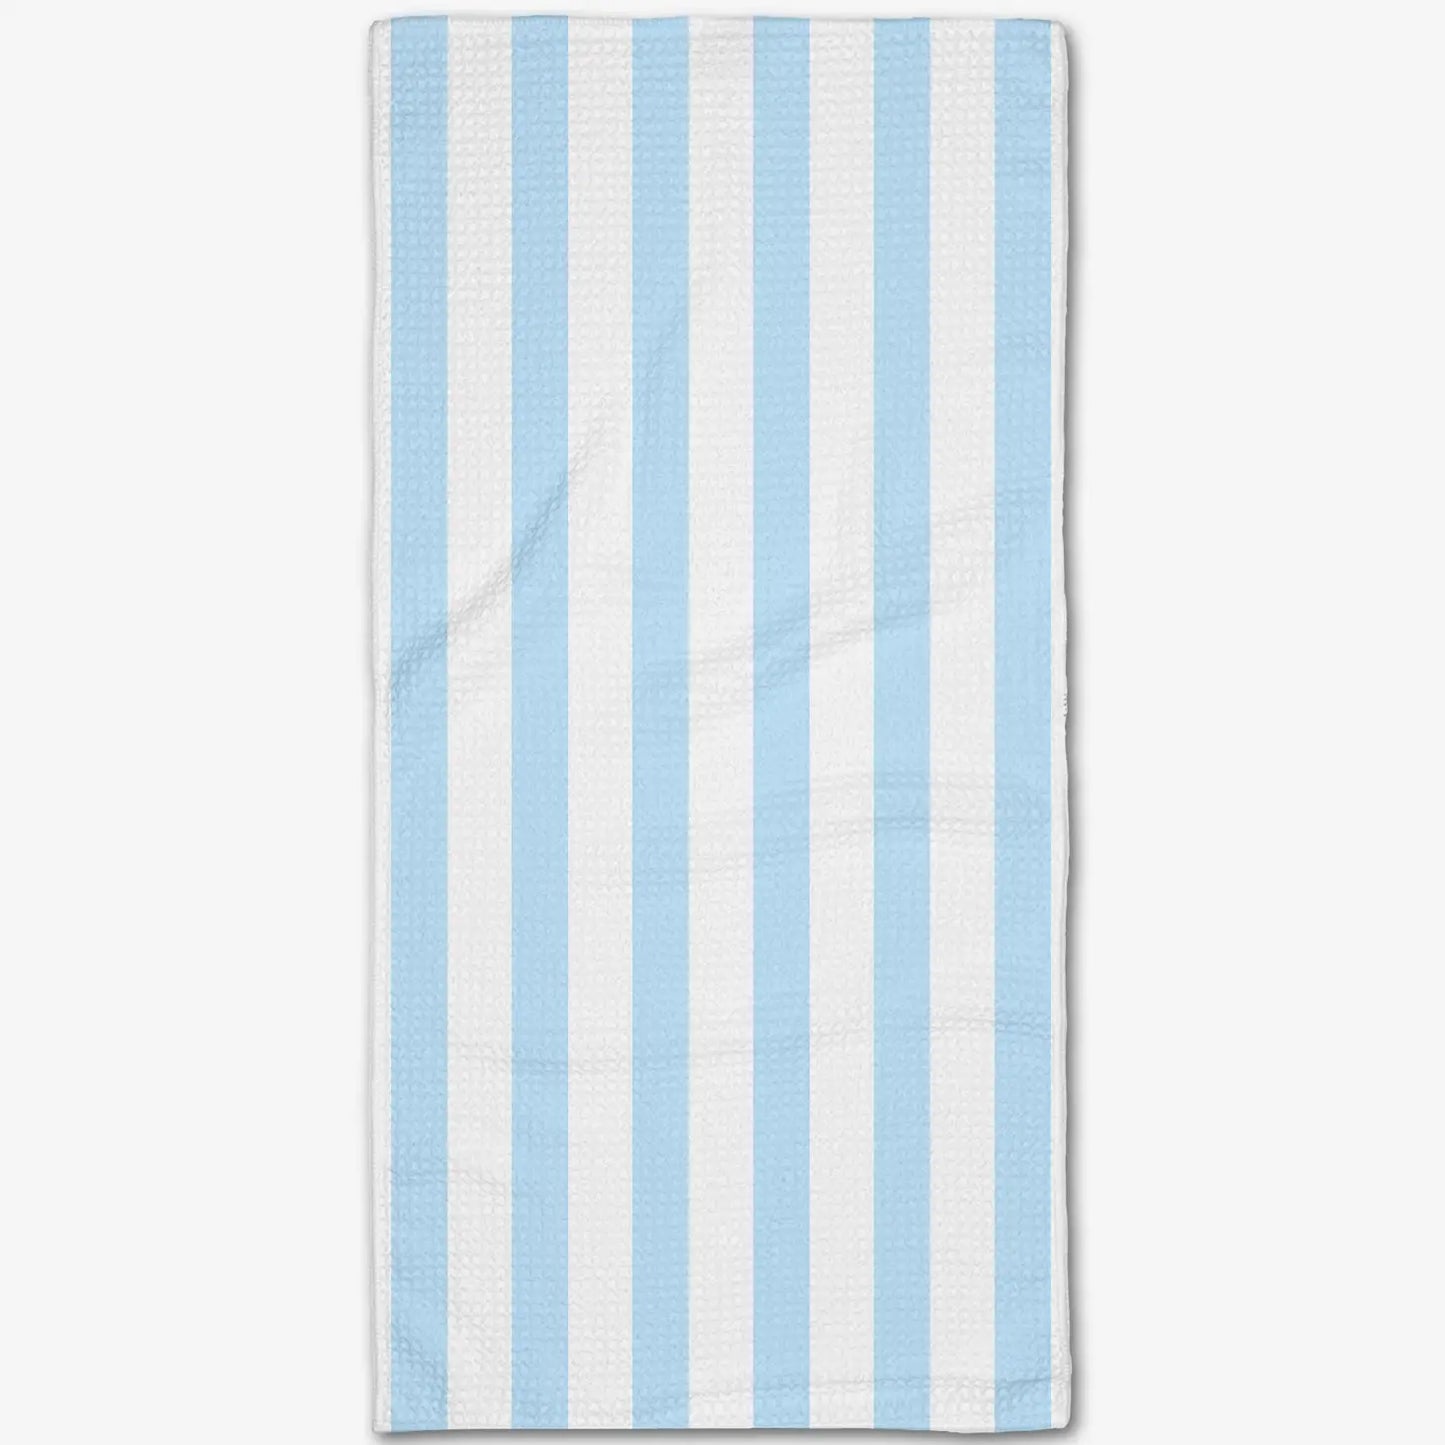 Geometry Bar Towel - Seaside Stripes